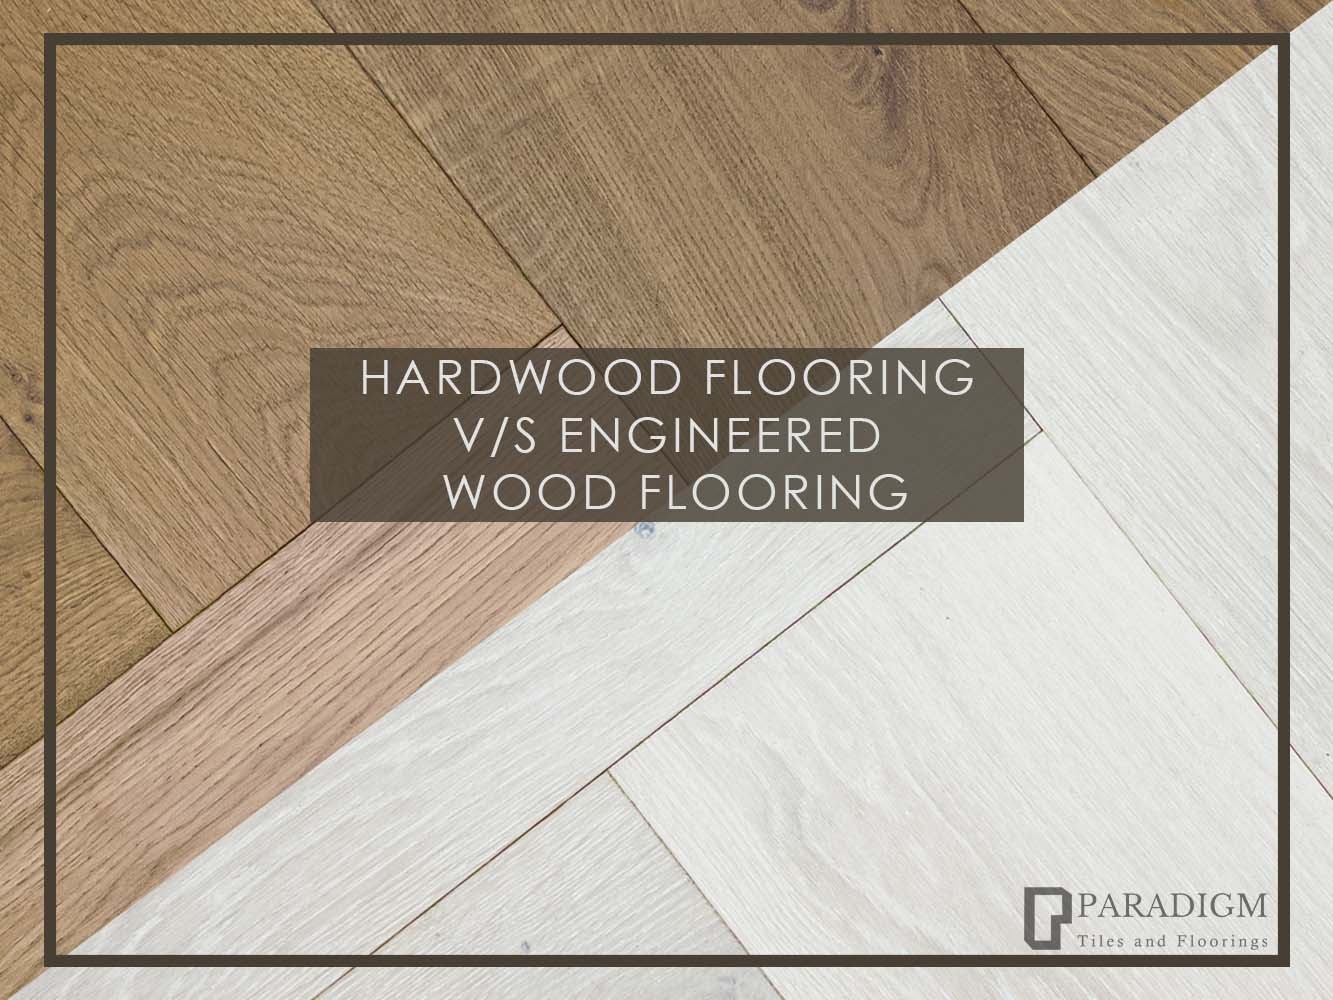 Hardwood flooring vs LVT